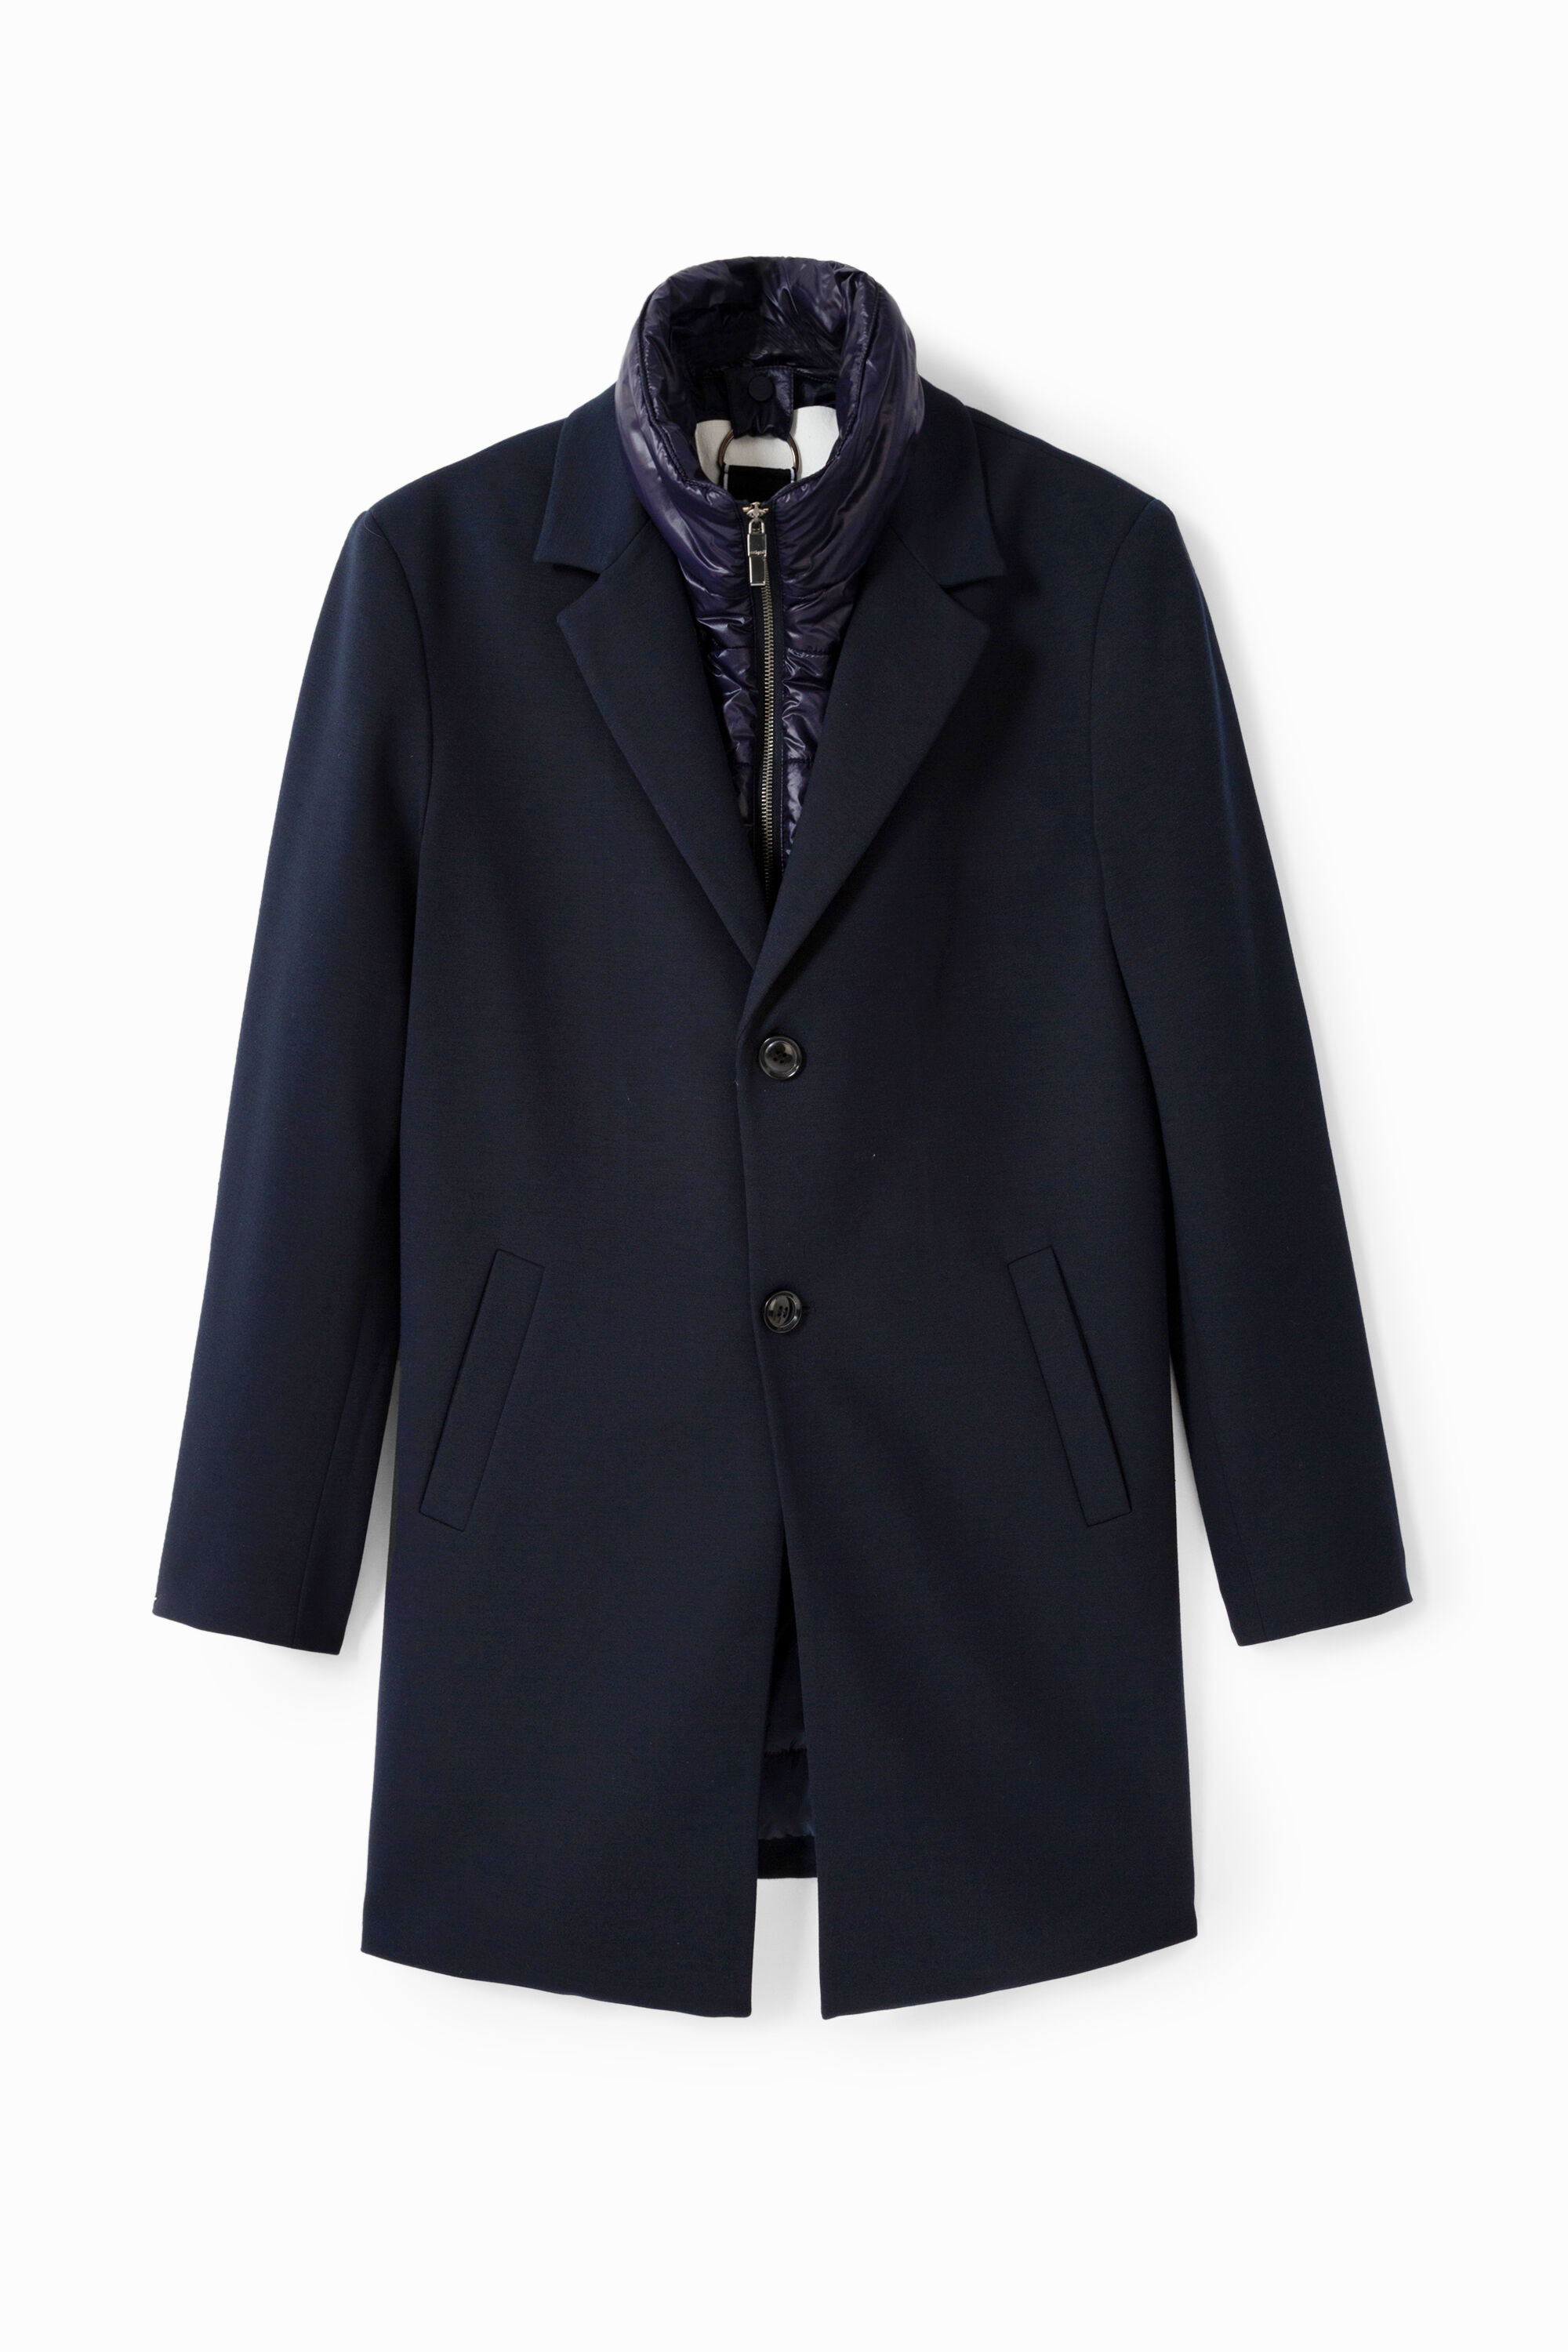 Coat Inner jacket 2 in 1 - BLUE - 48